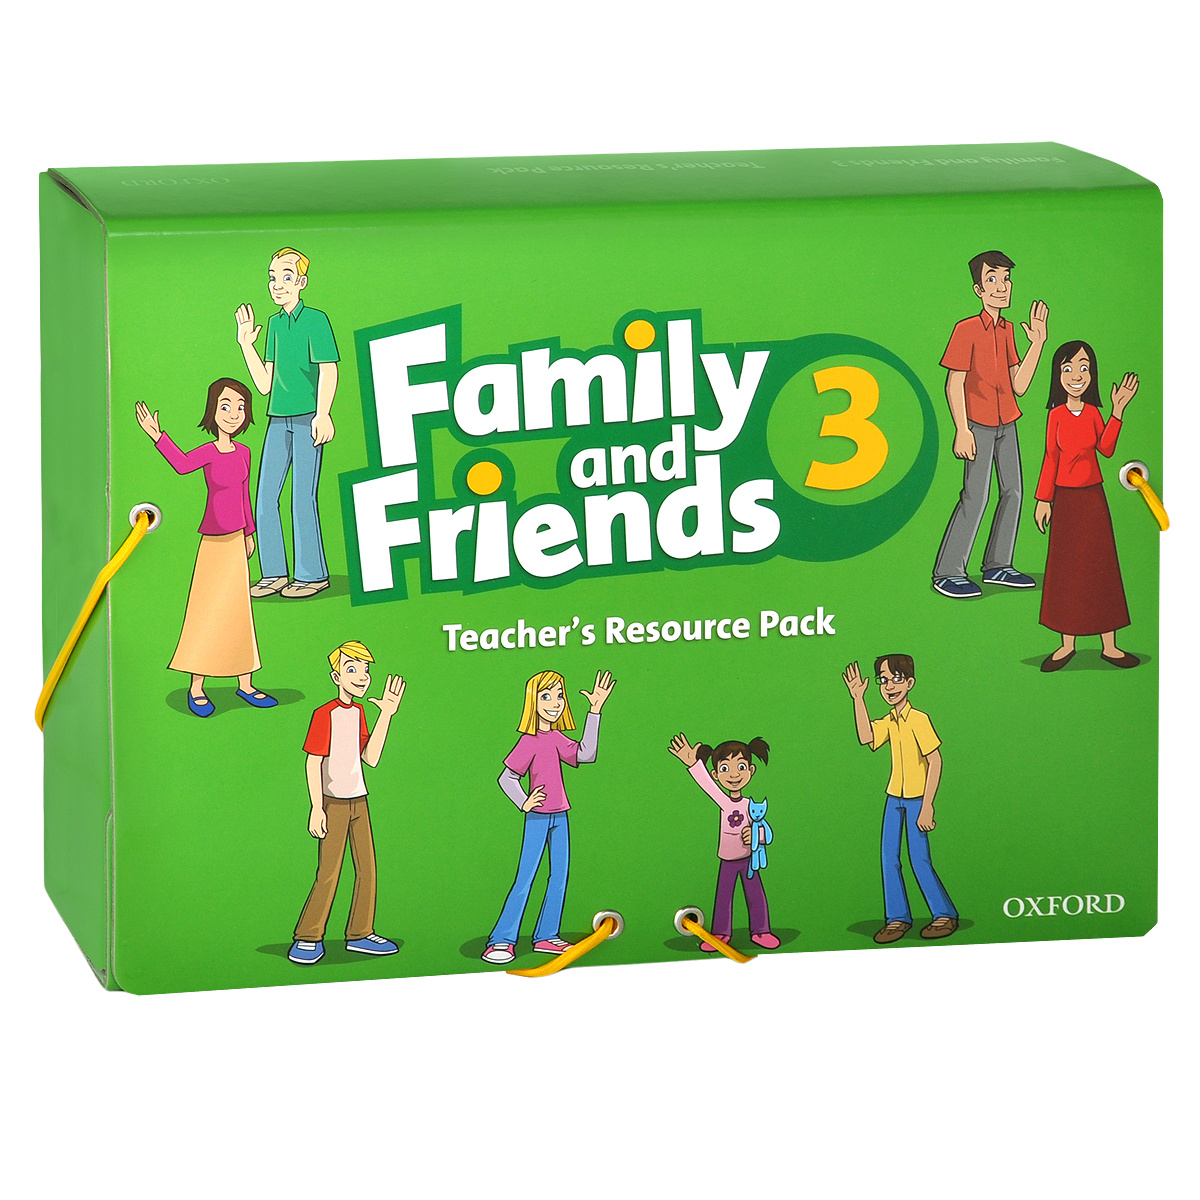 Friends tests. Английский Family and friends 3. Oxford Family and friends 3. Фэмили френдс. Oxford Family and friends.